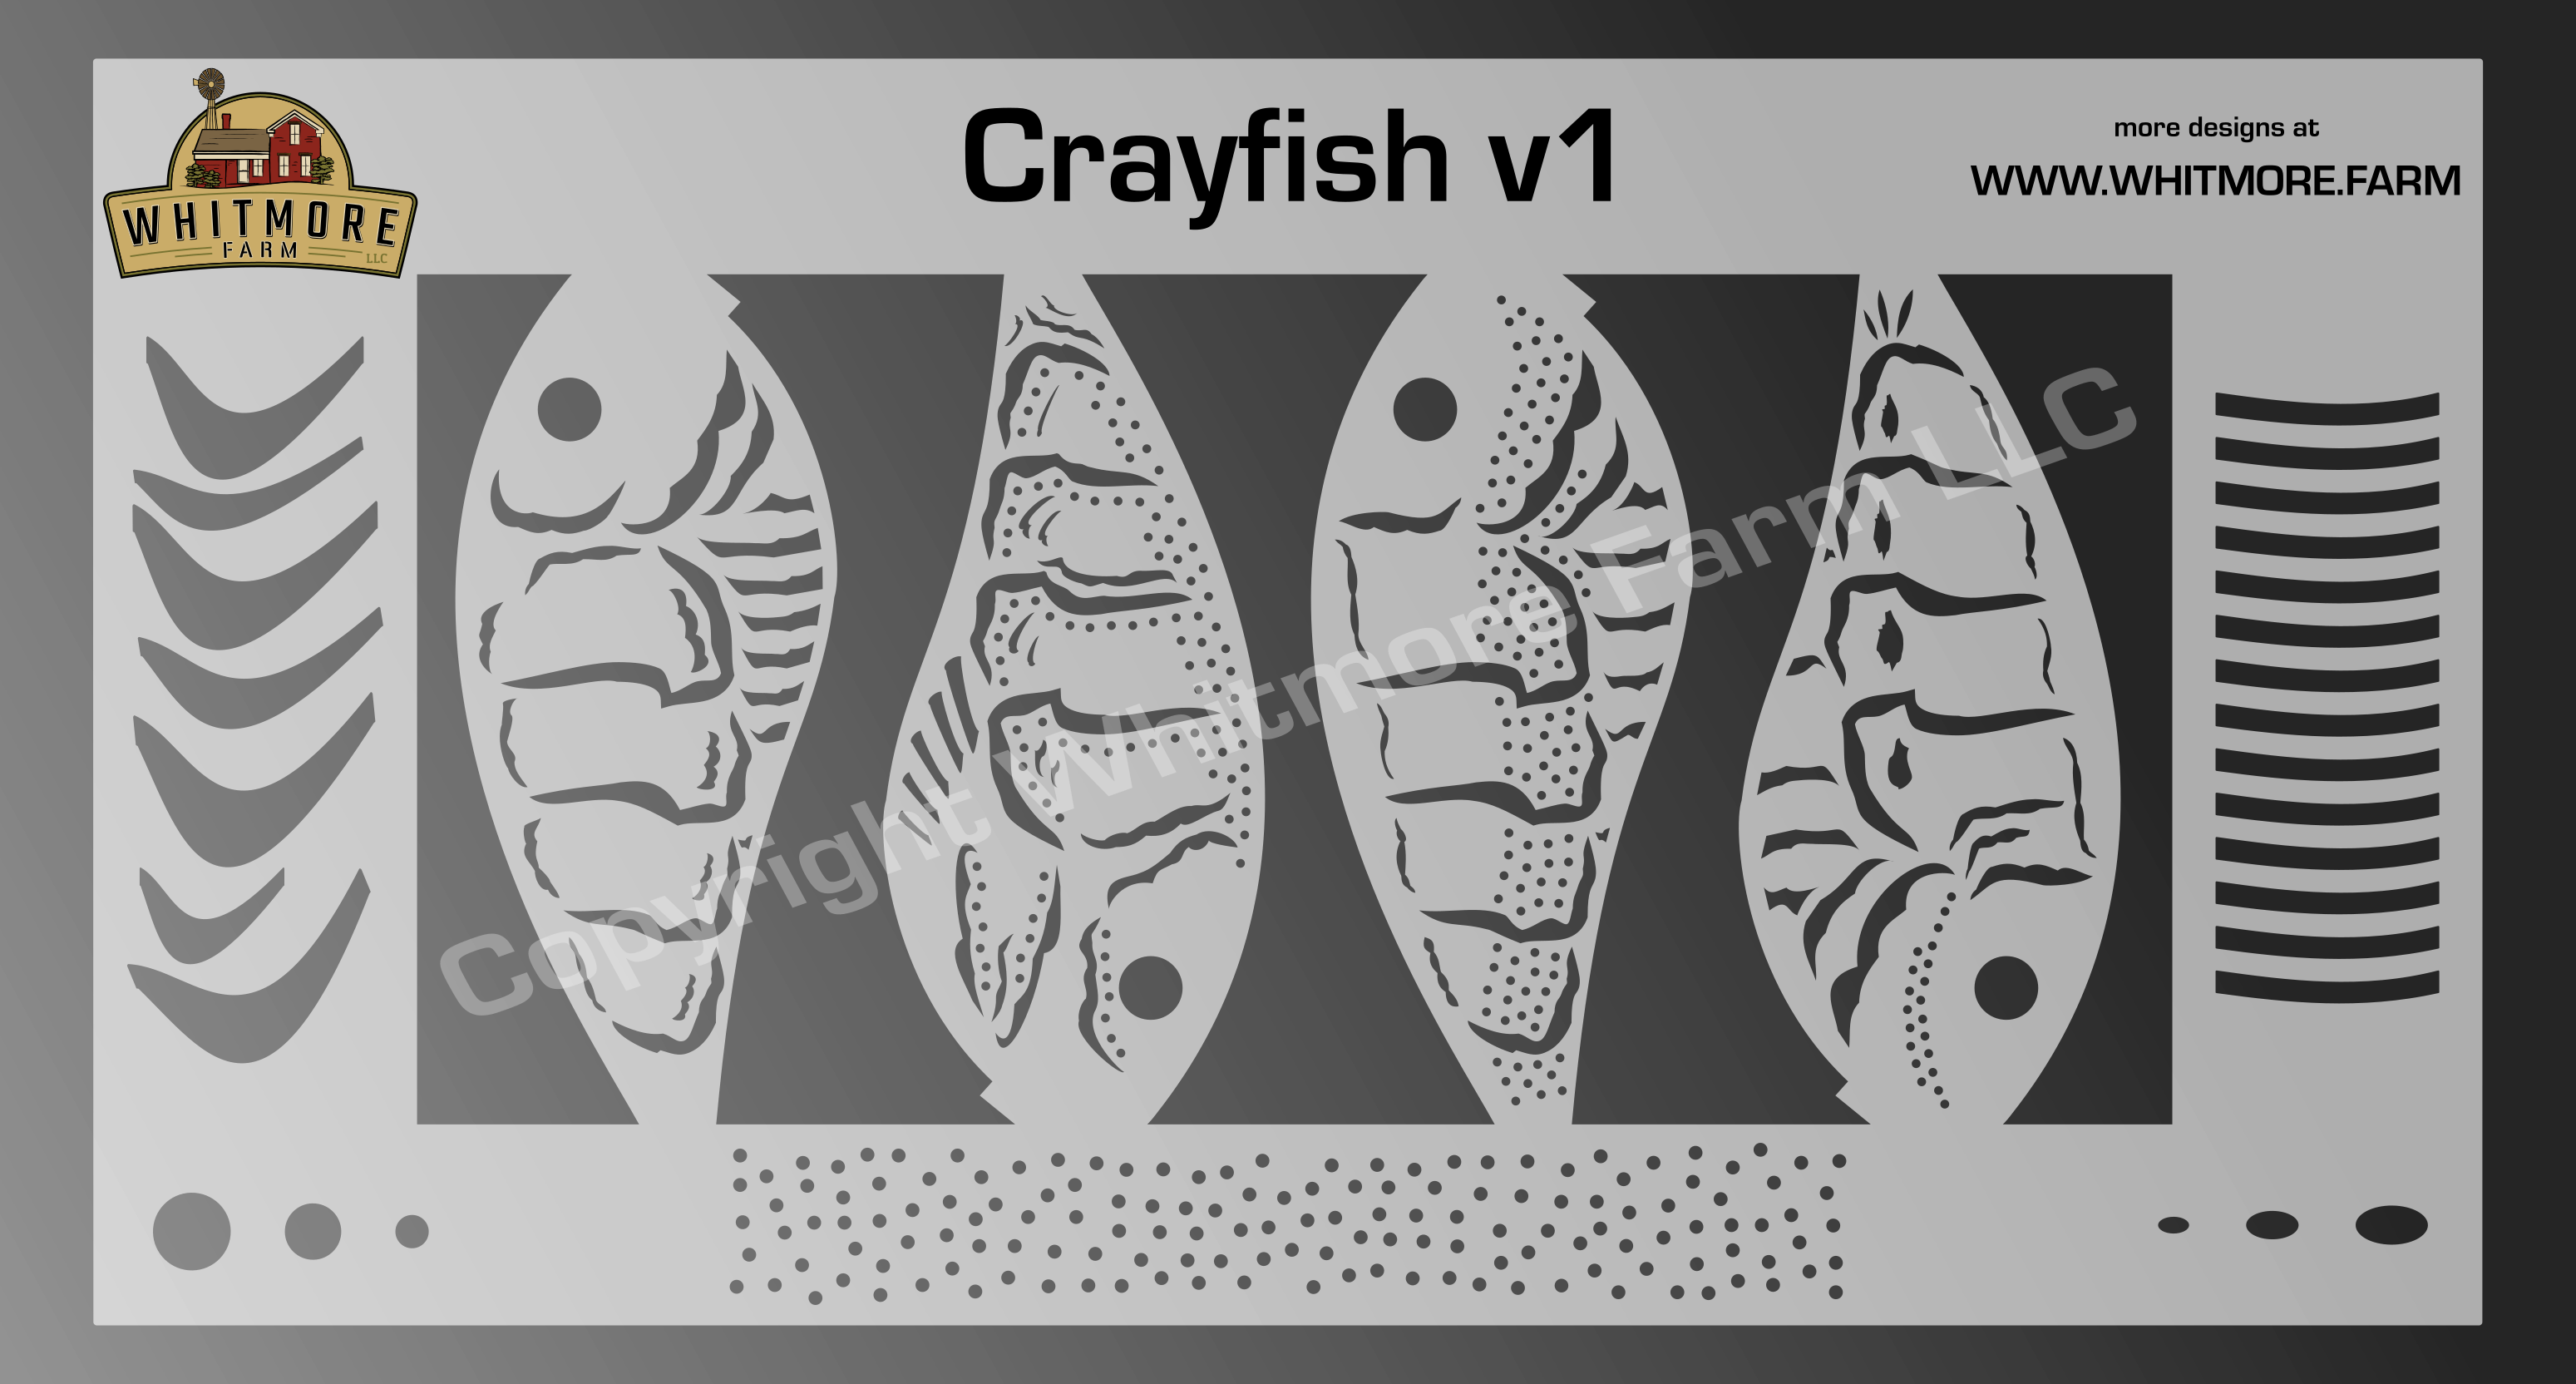 2 x 8” Fishing Lure Stencils - Various Patterns